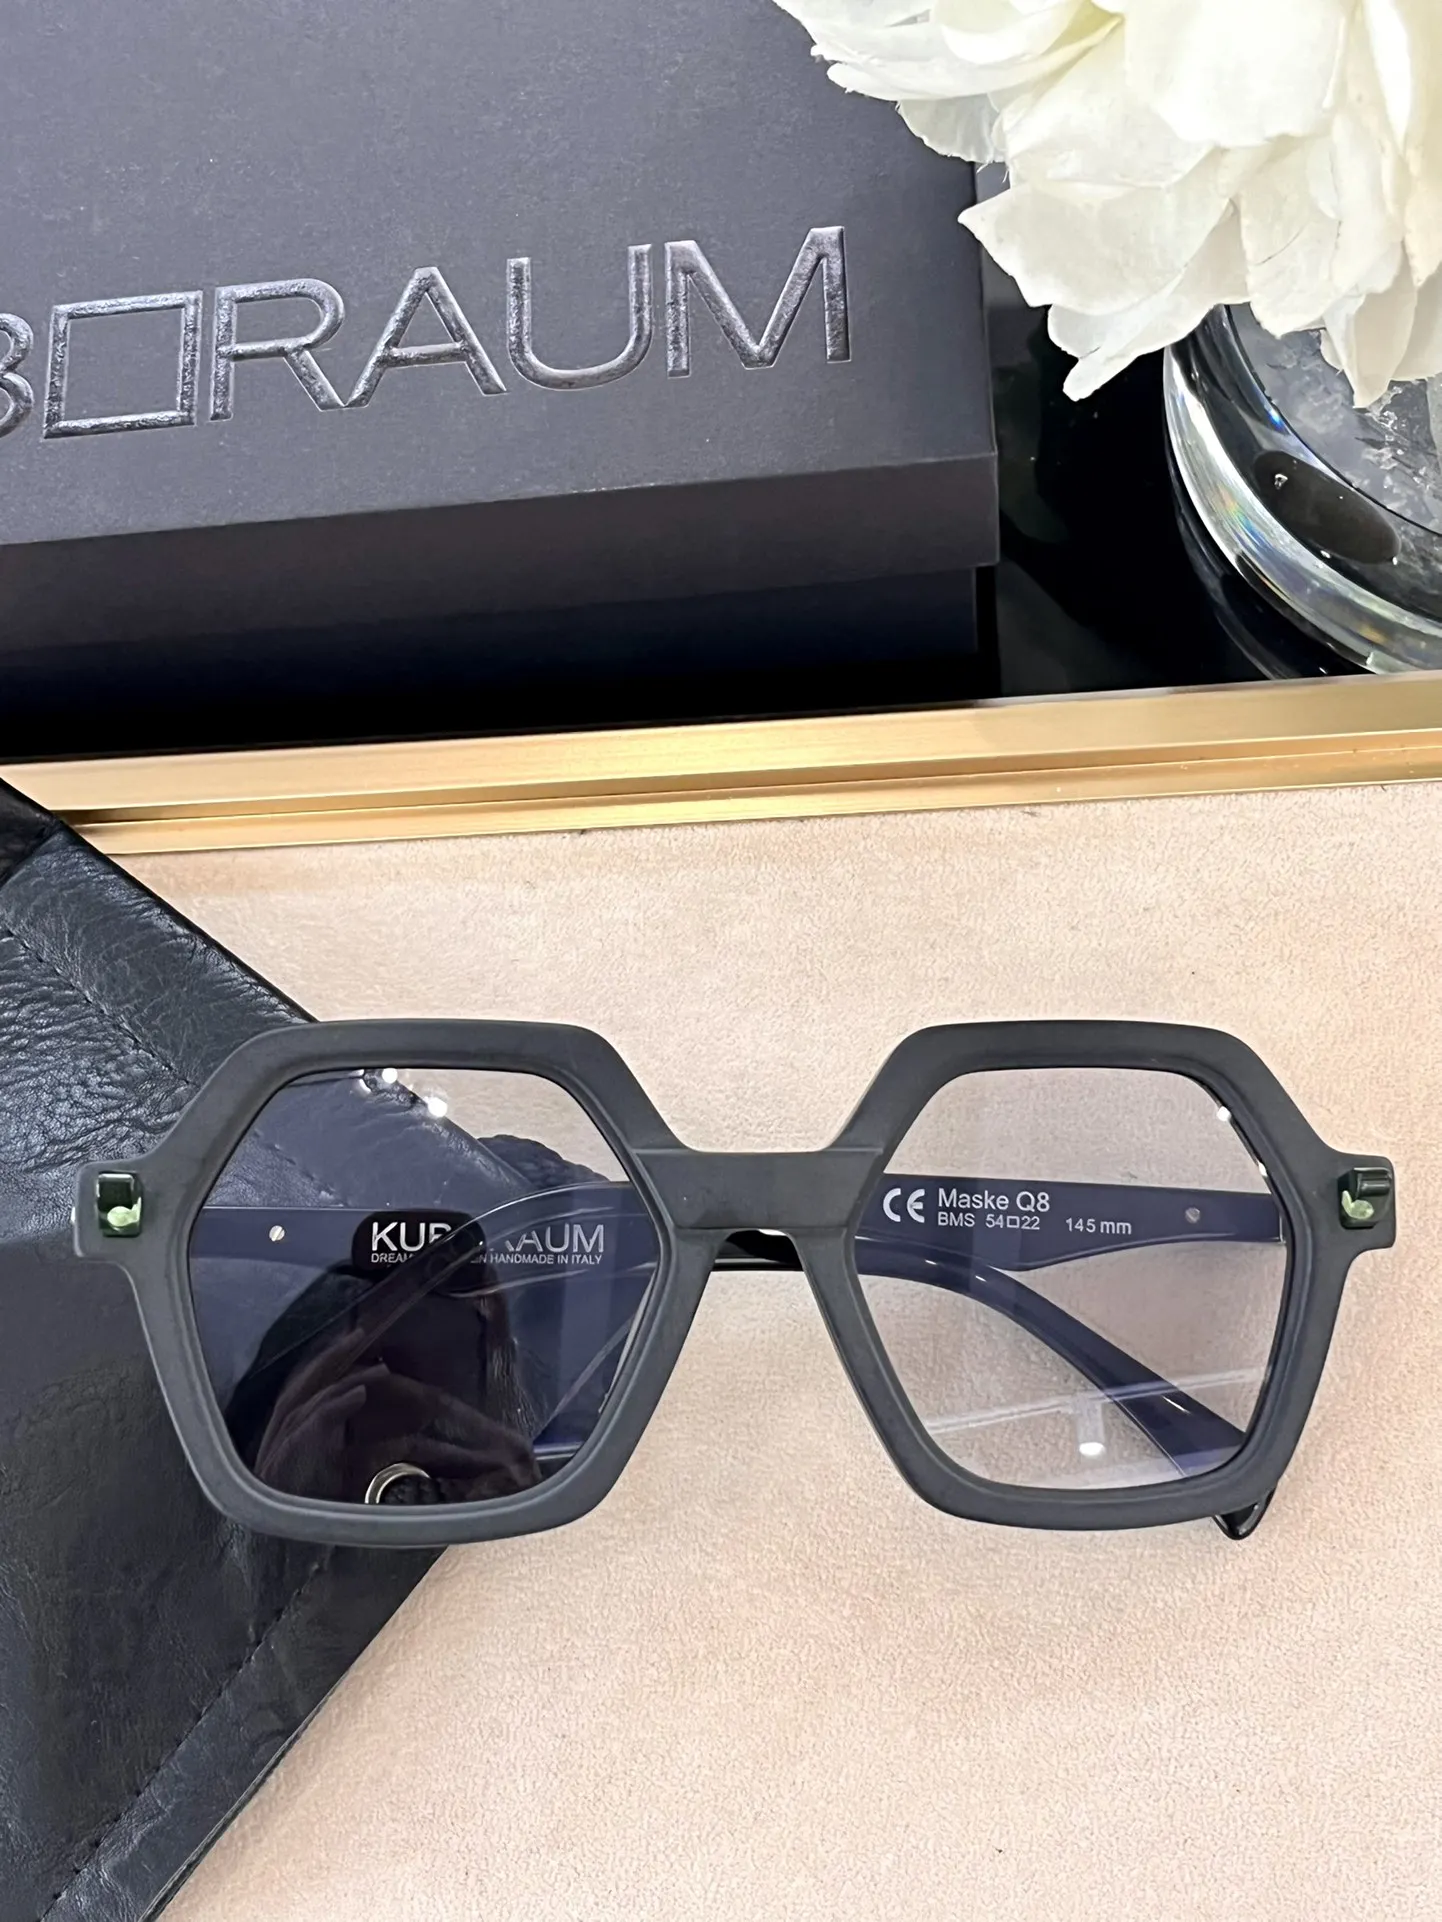 

Germany KUBRAUM Thick Acetate Women Men UV400 Protection Vintage Retro Classcial Sunglasses with Case Oculos Maske Q8